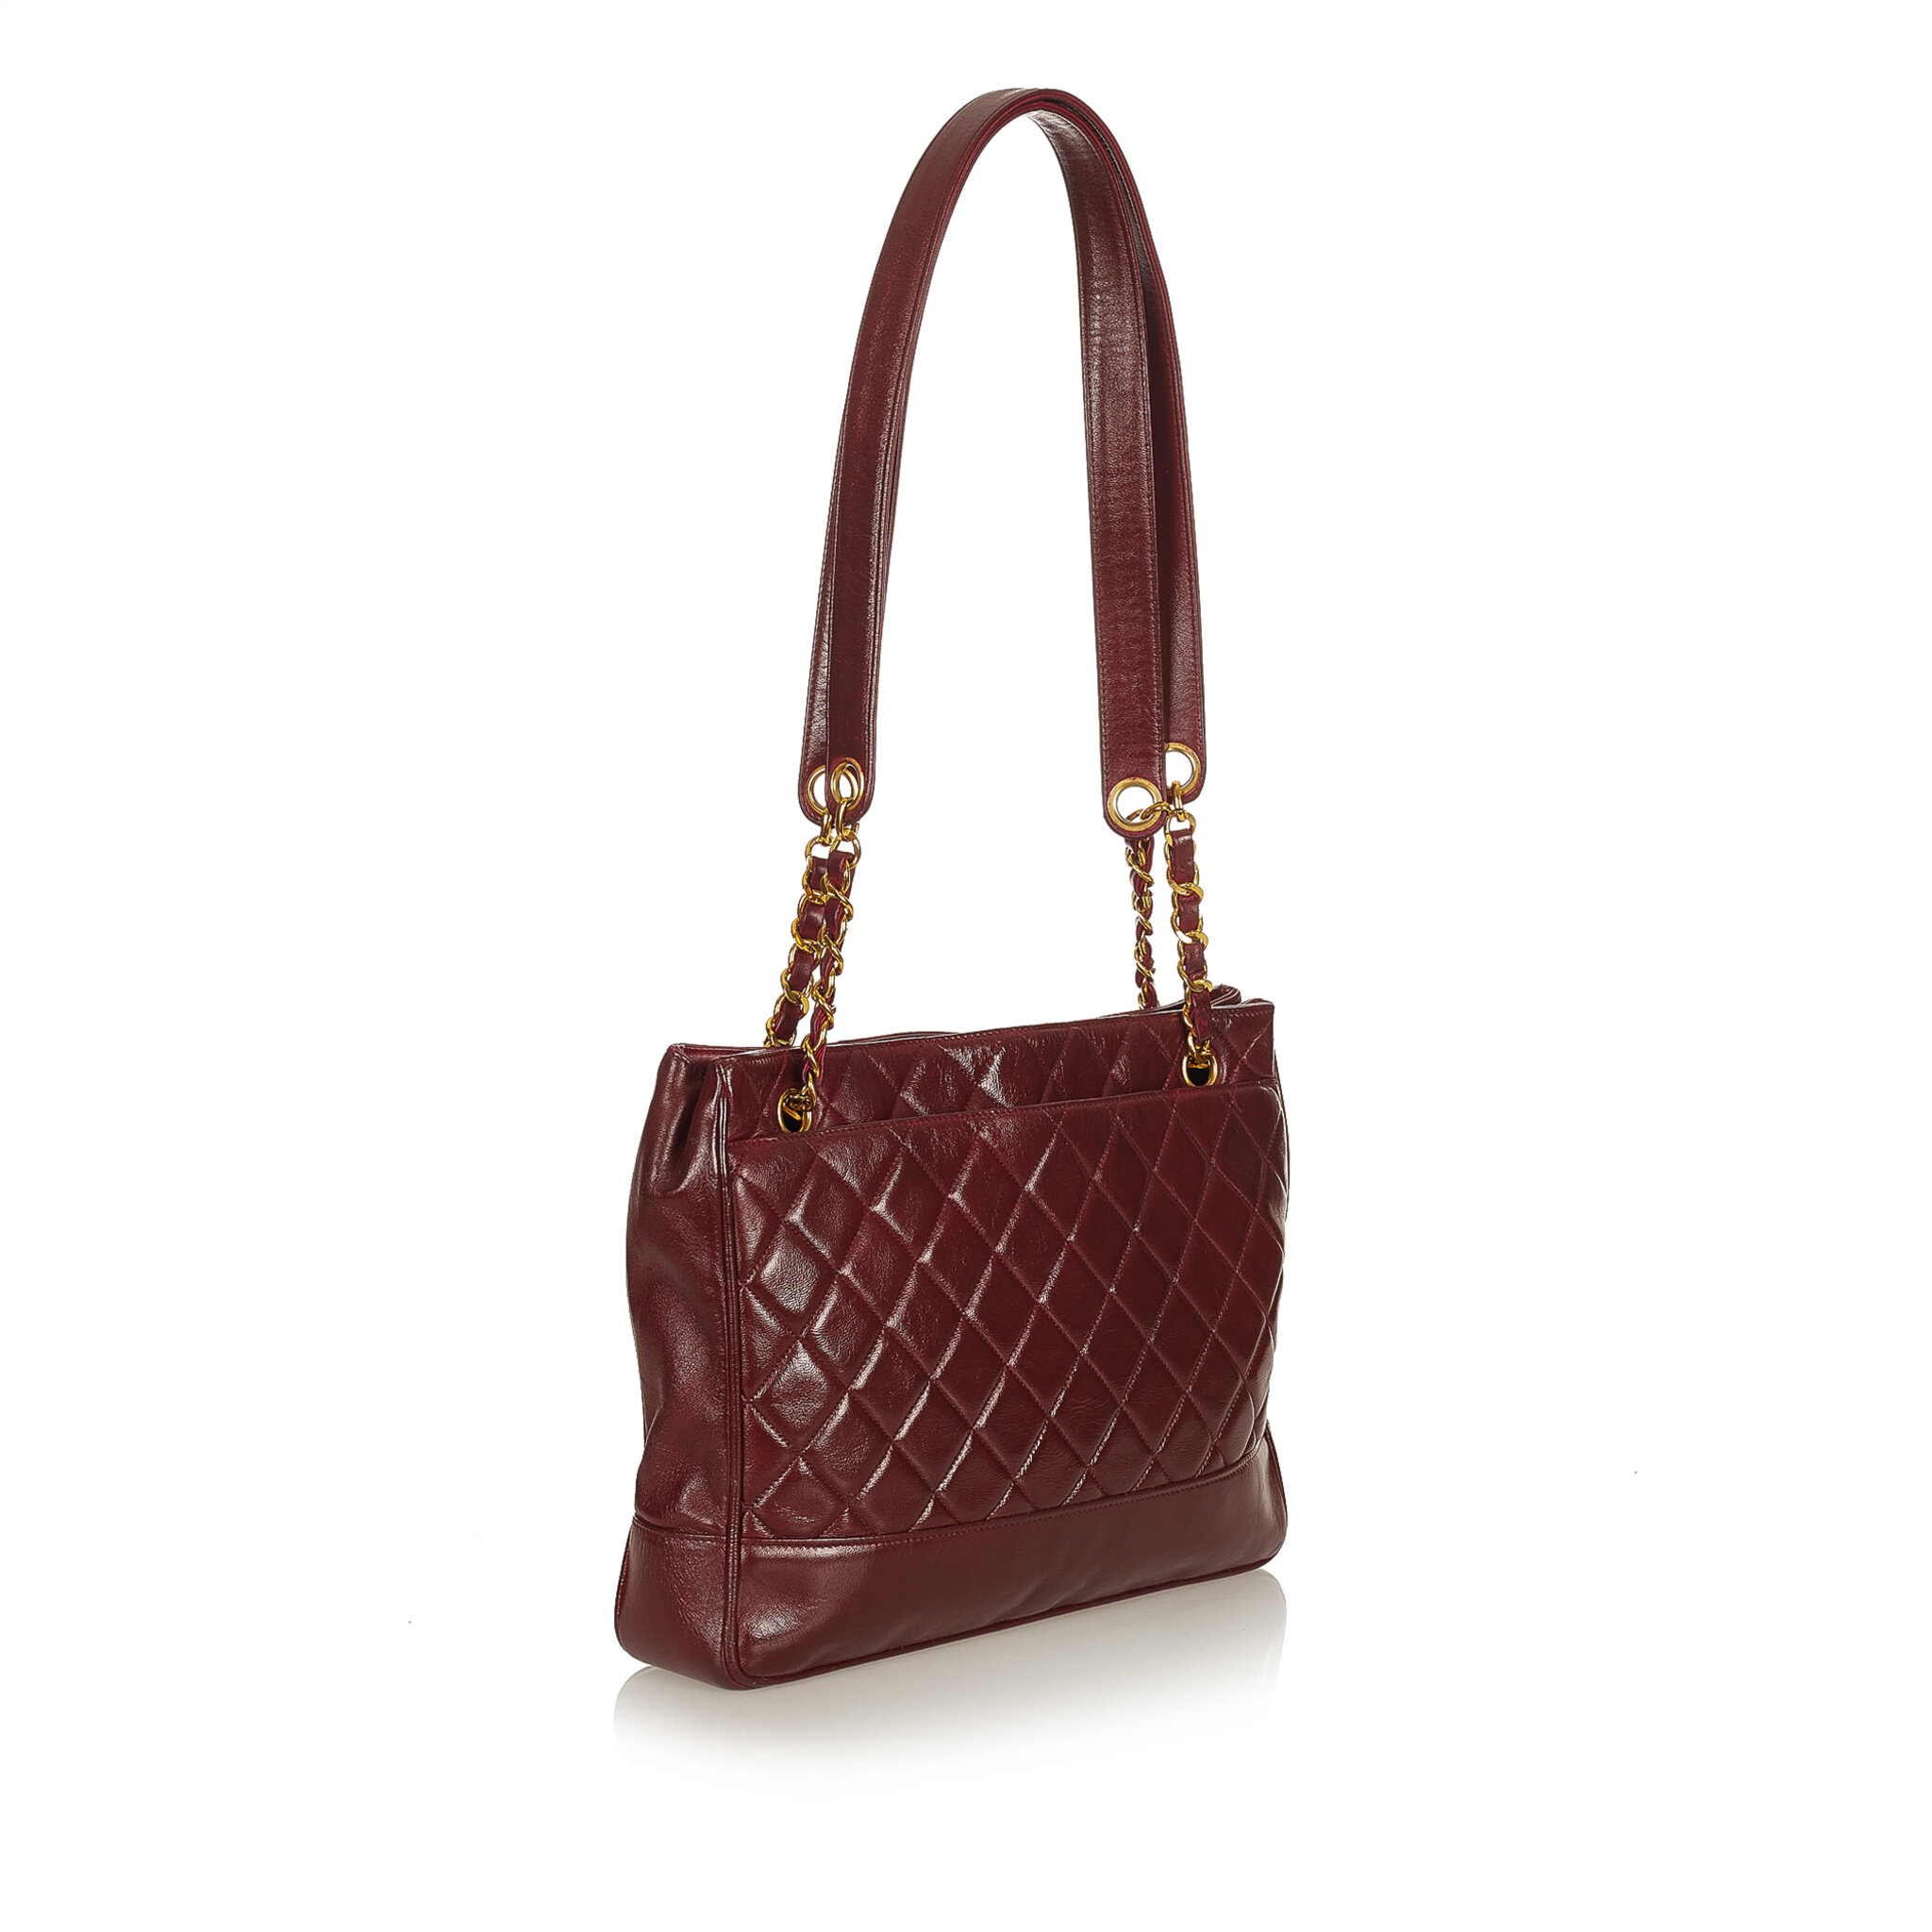 Chanel Matelasse Lambskin Leather Shoulder Bag, ONESIZE, bordeaux